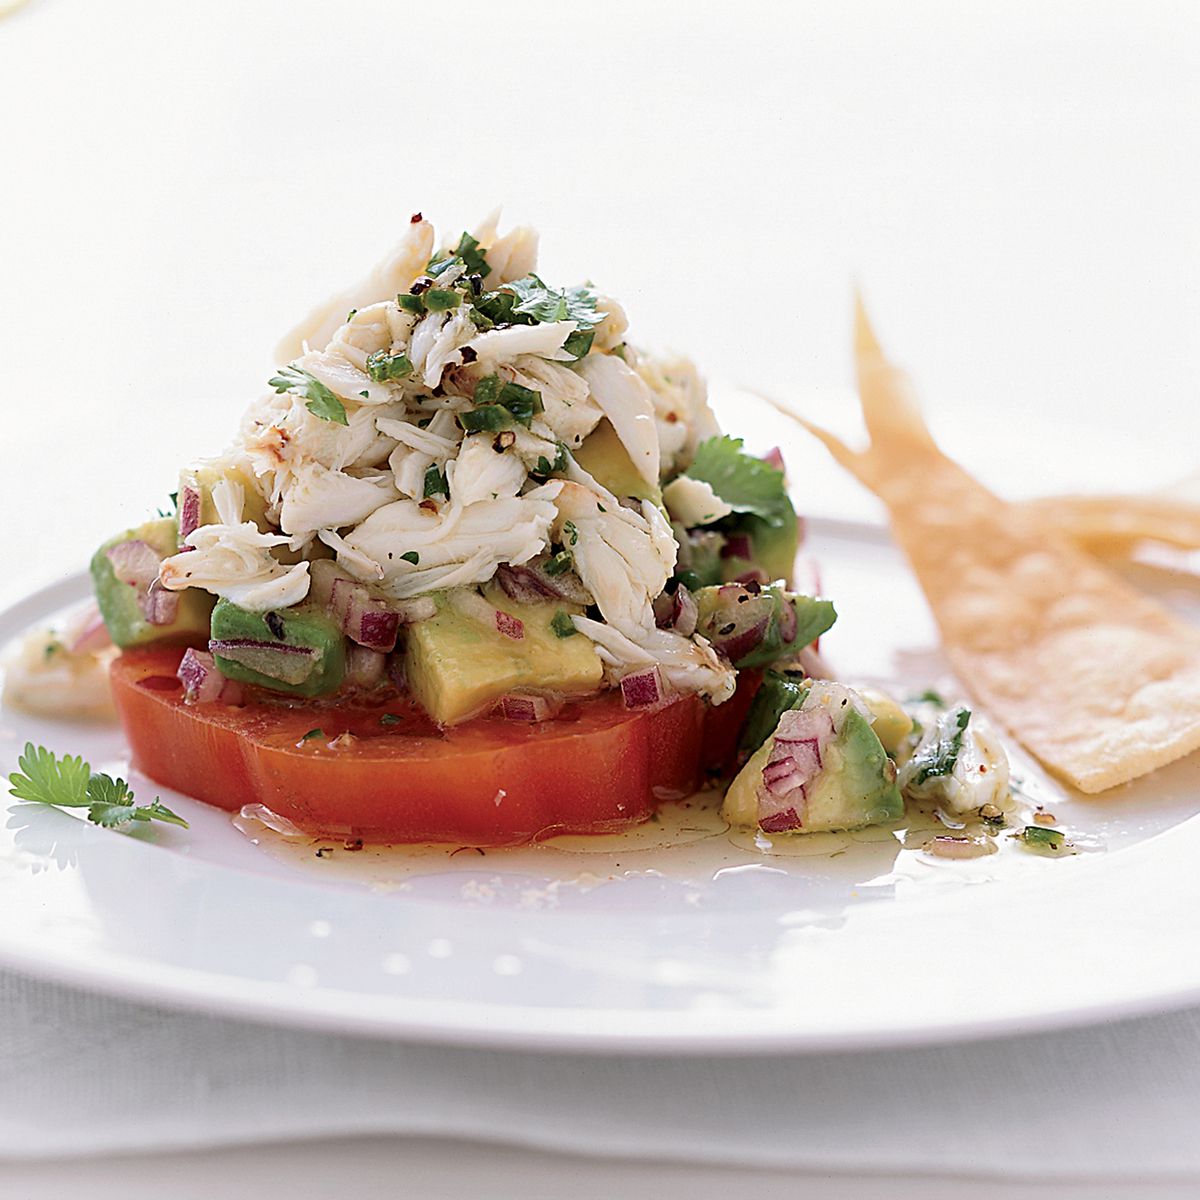 Chile-Lime Crab Salad with Tomato and Avocado